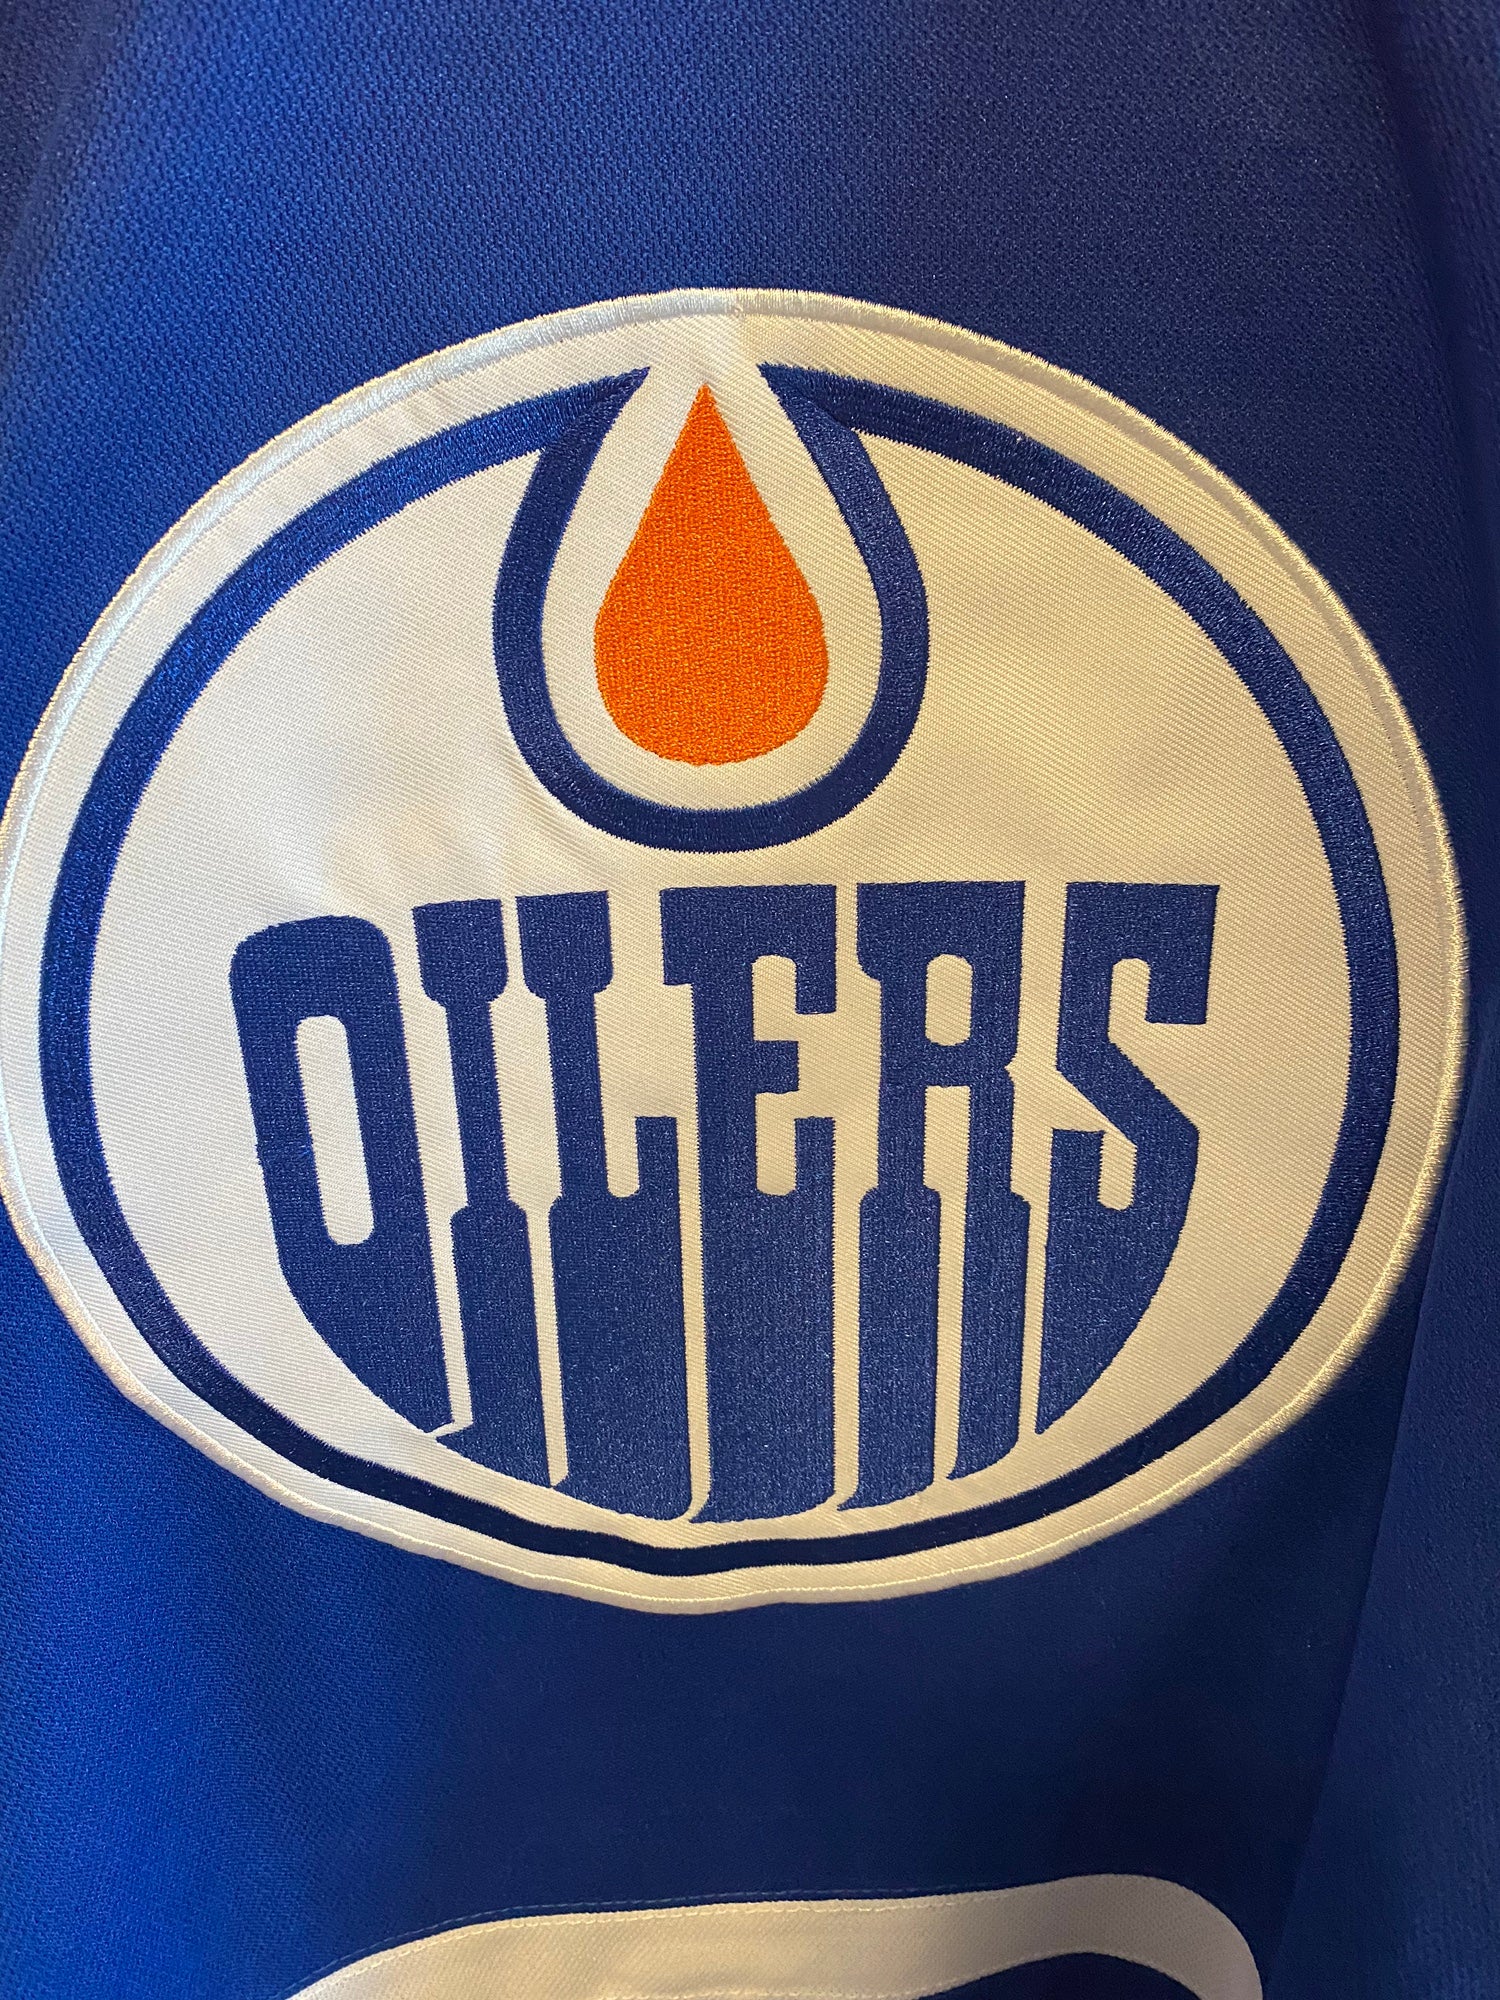 NEW* Connor McDavid Oilers Alternate NHL Jersey Size L 52